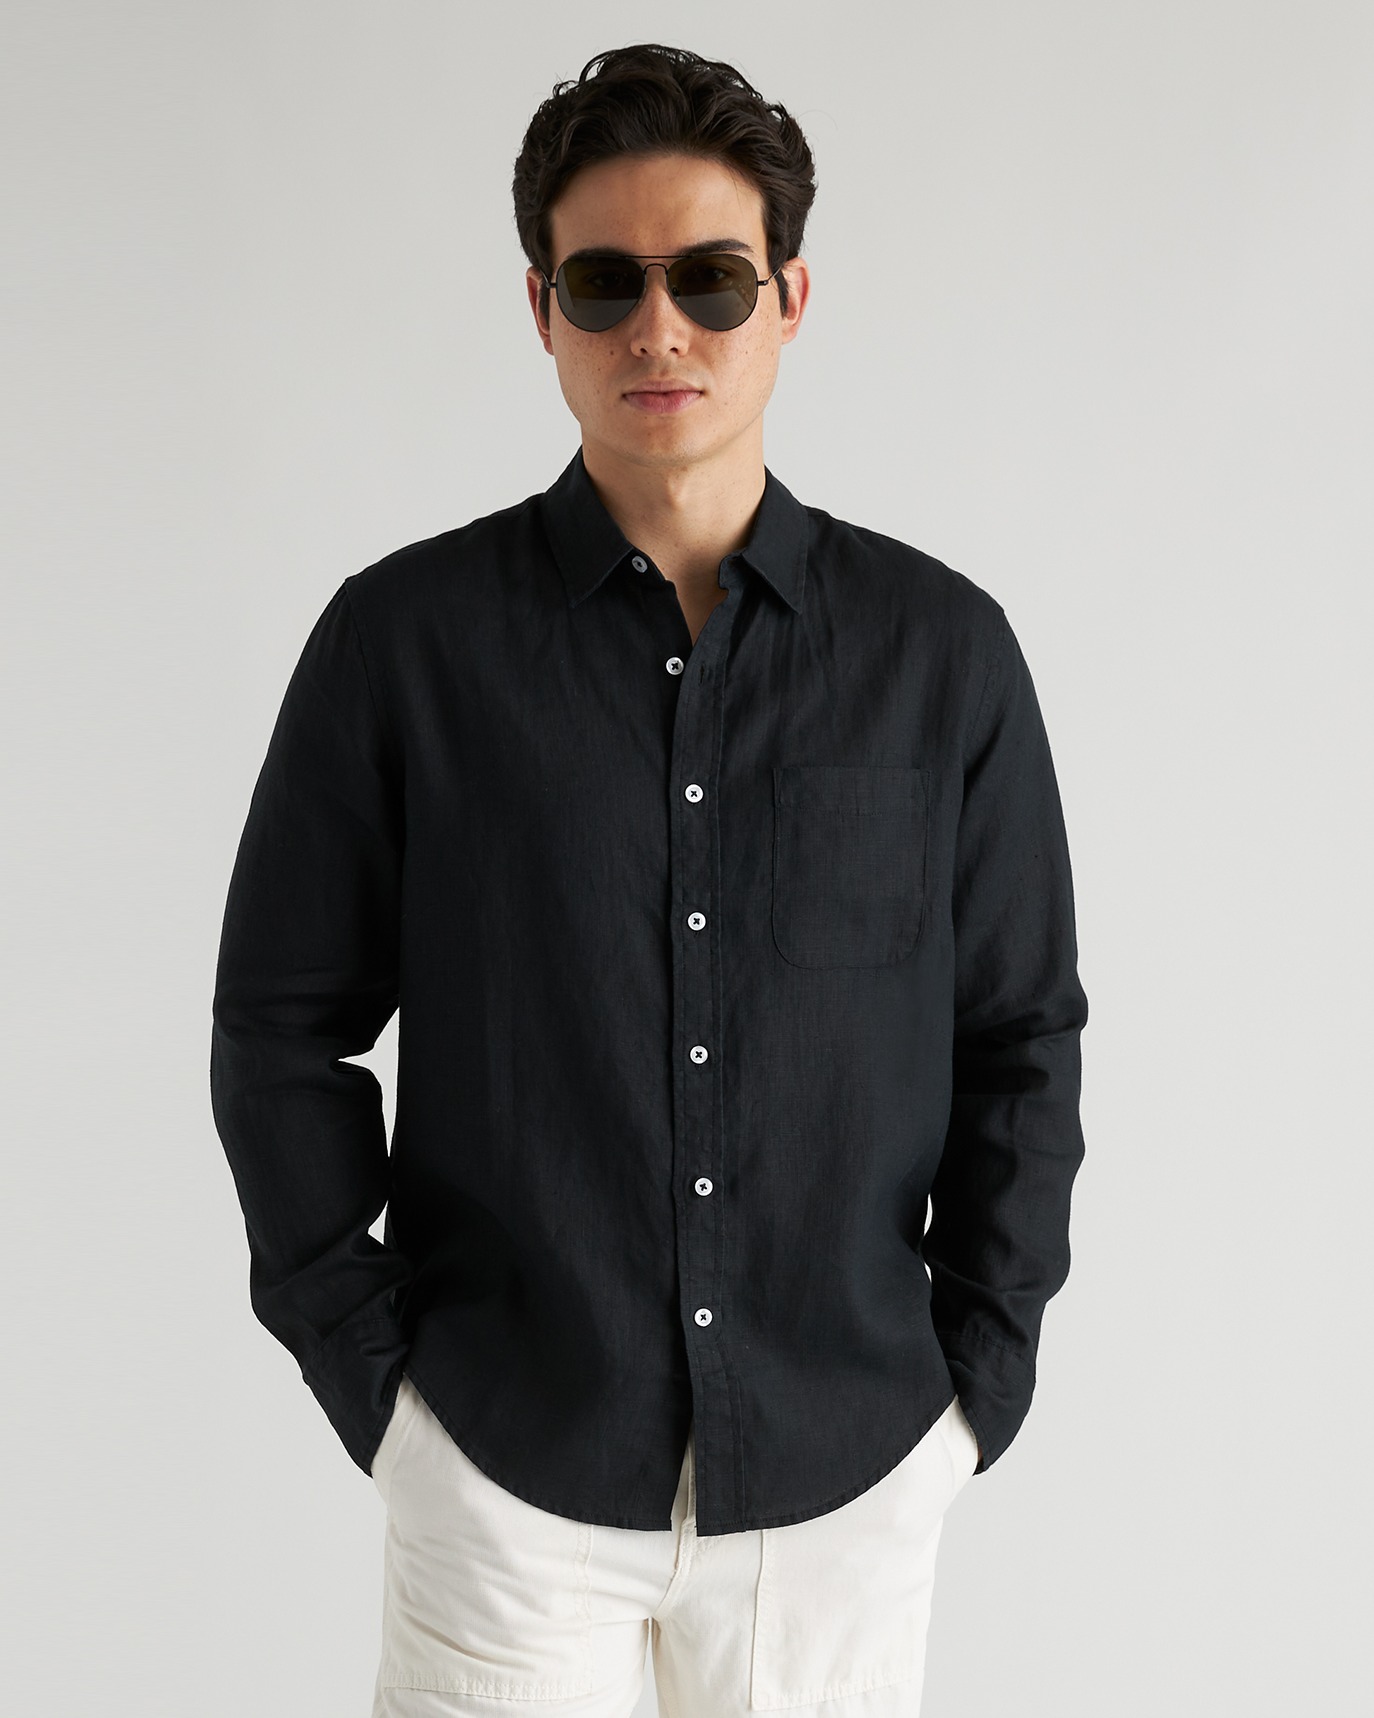 Quince Men's 100% European Linen Long Sleeve Pocket Shirt In Black